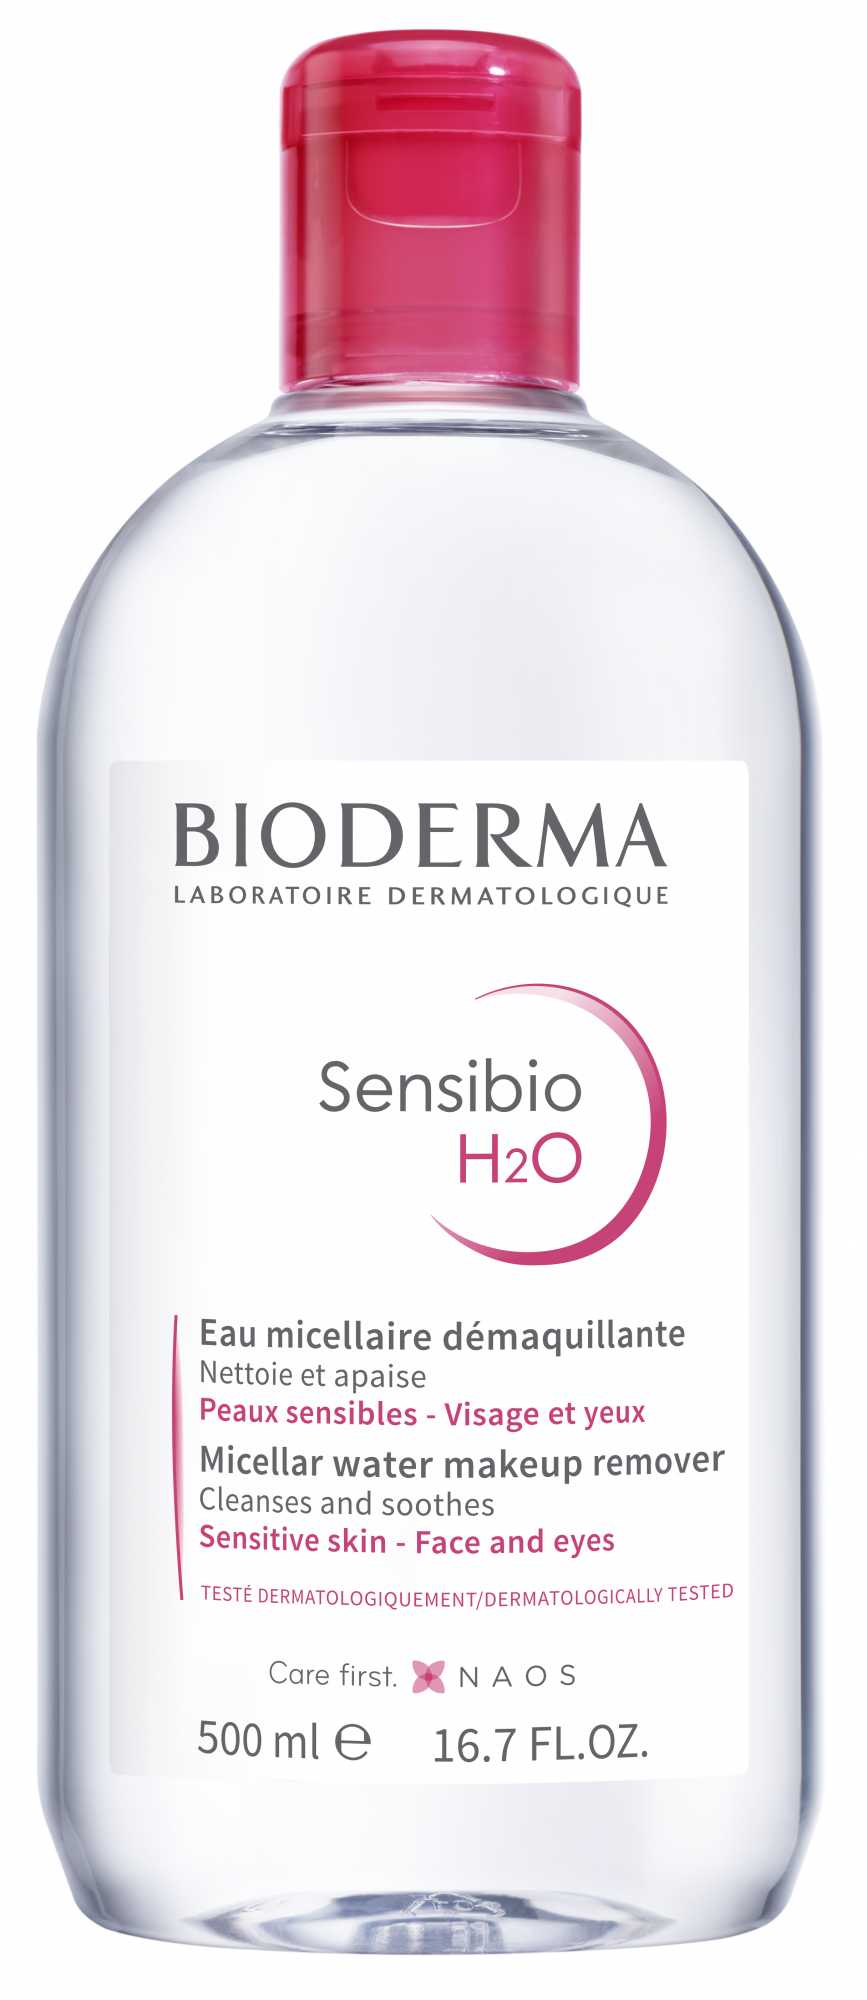 Sensibio H2O Cleansing, make-up remover water for sensitive skin